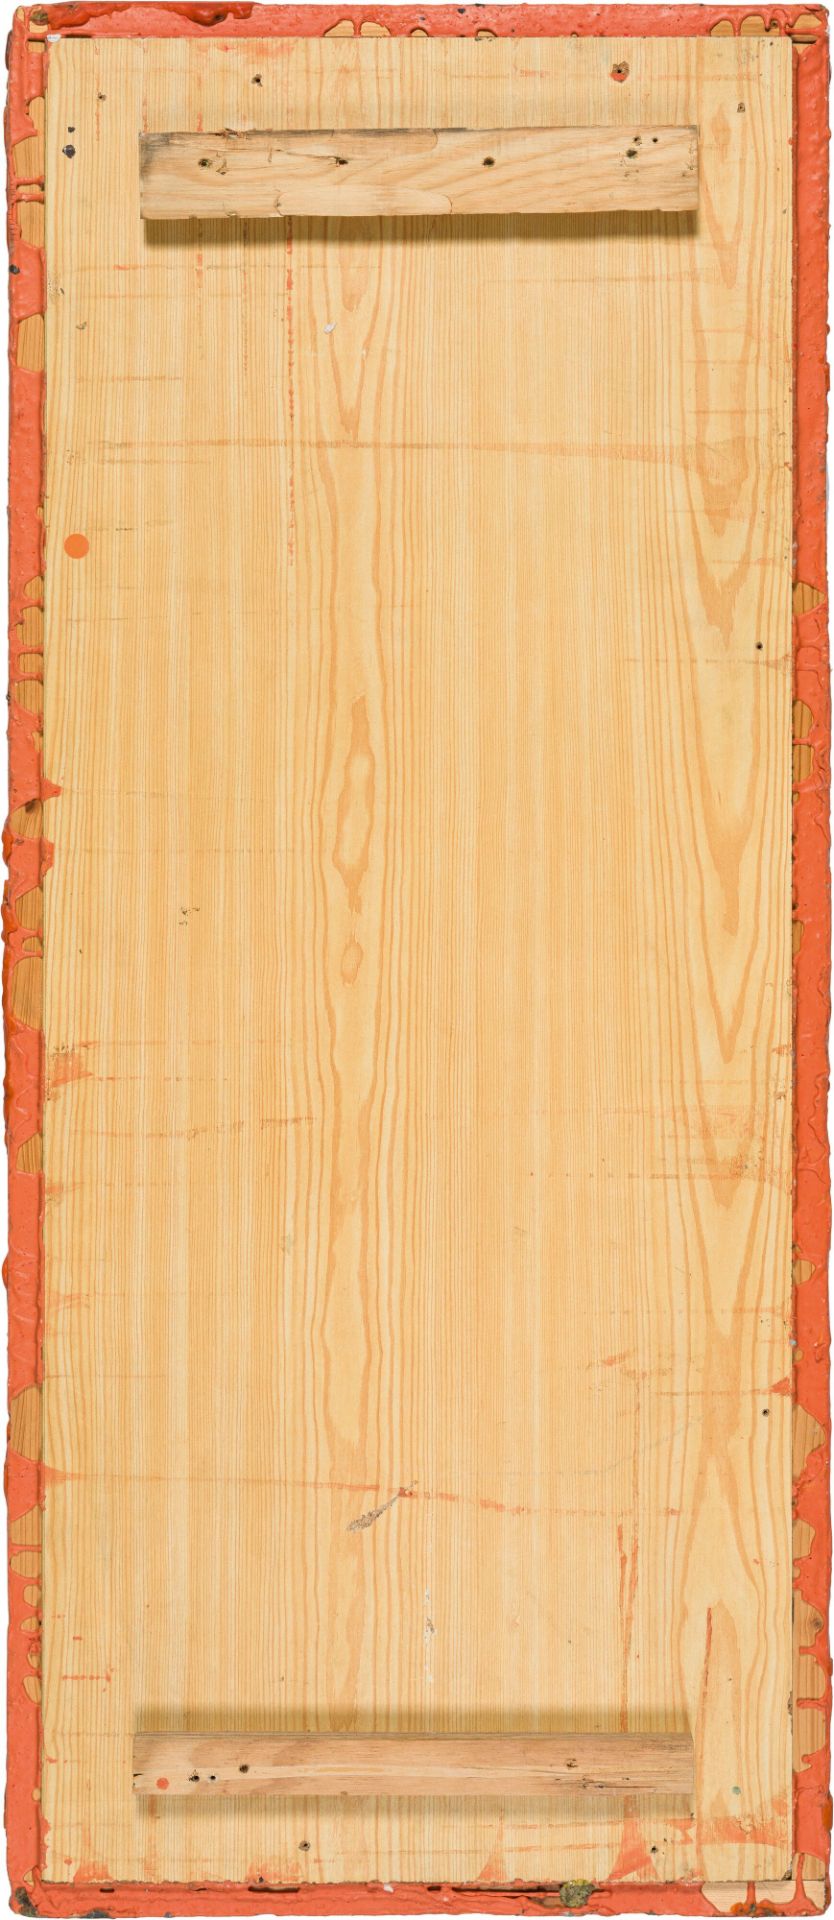 GelatinMona Lisa2007plasticine on wood; unframed115 x 50 x 7 cmGalerie Meyer-Kainer, Vienna; - Image 2 of 2